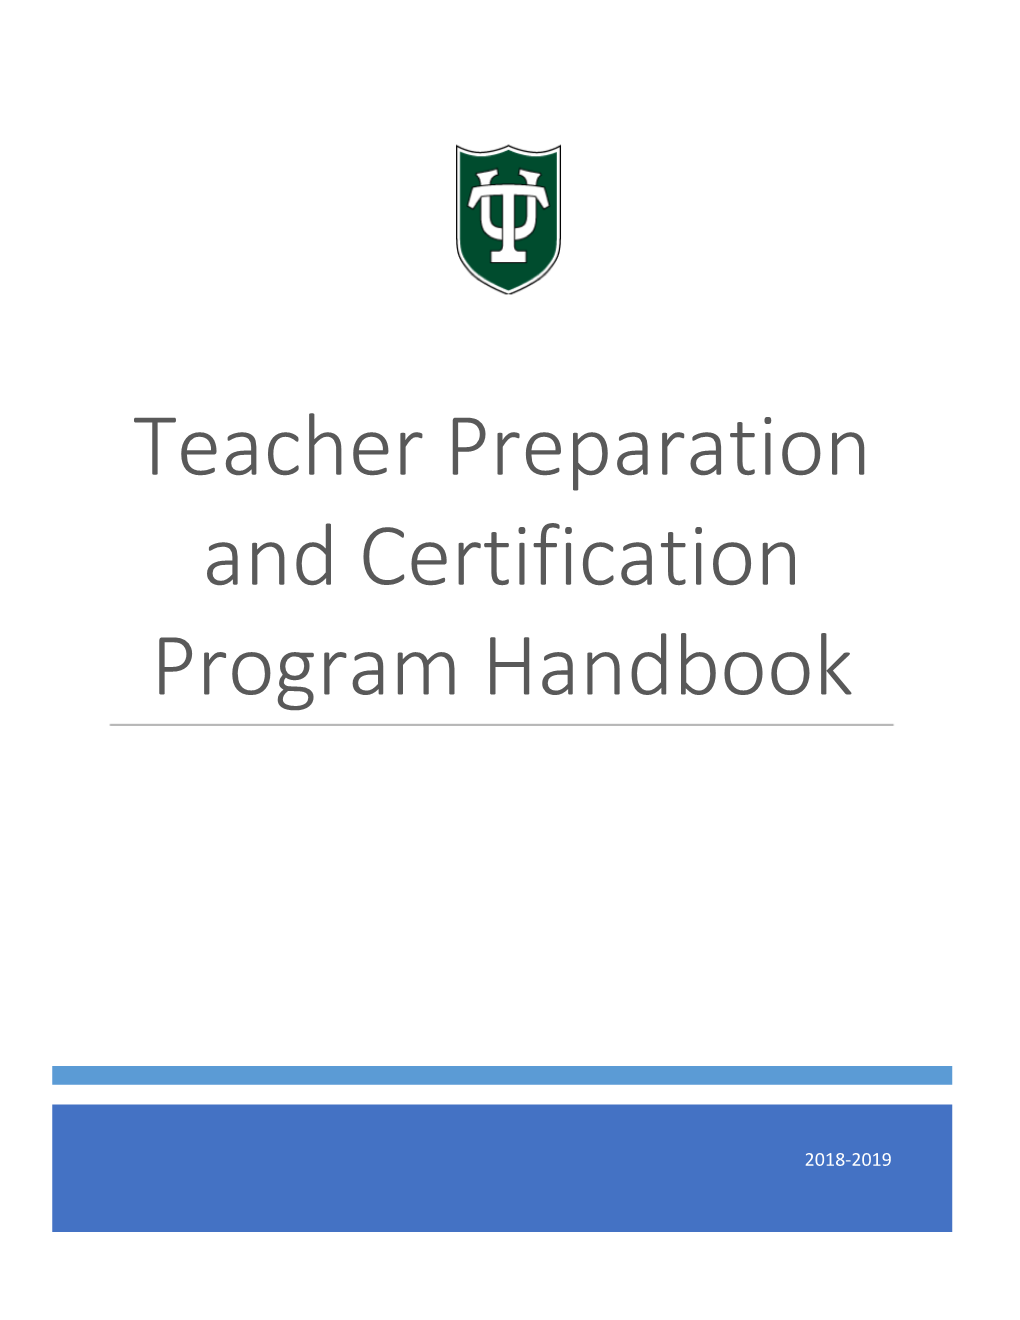 Teacher Preparation and Certification Program Handbook